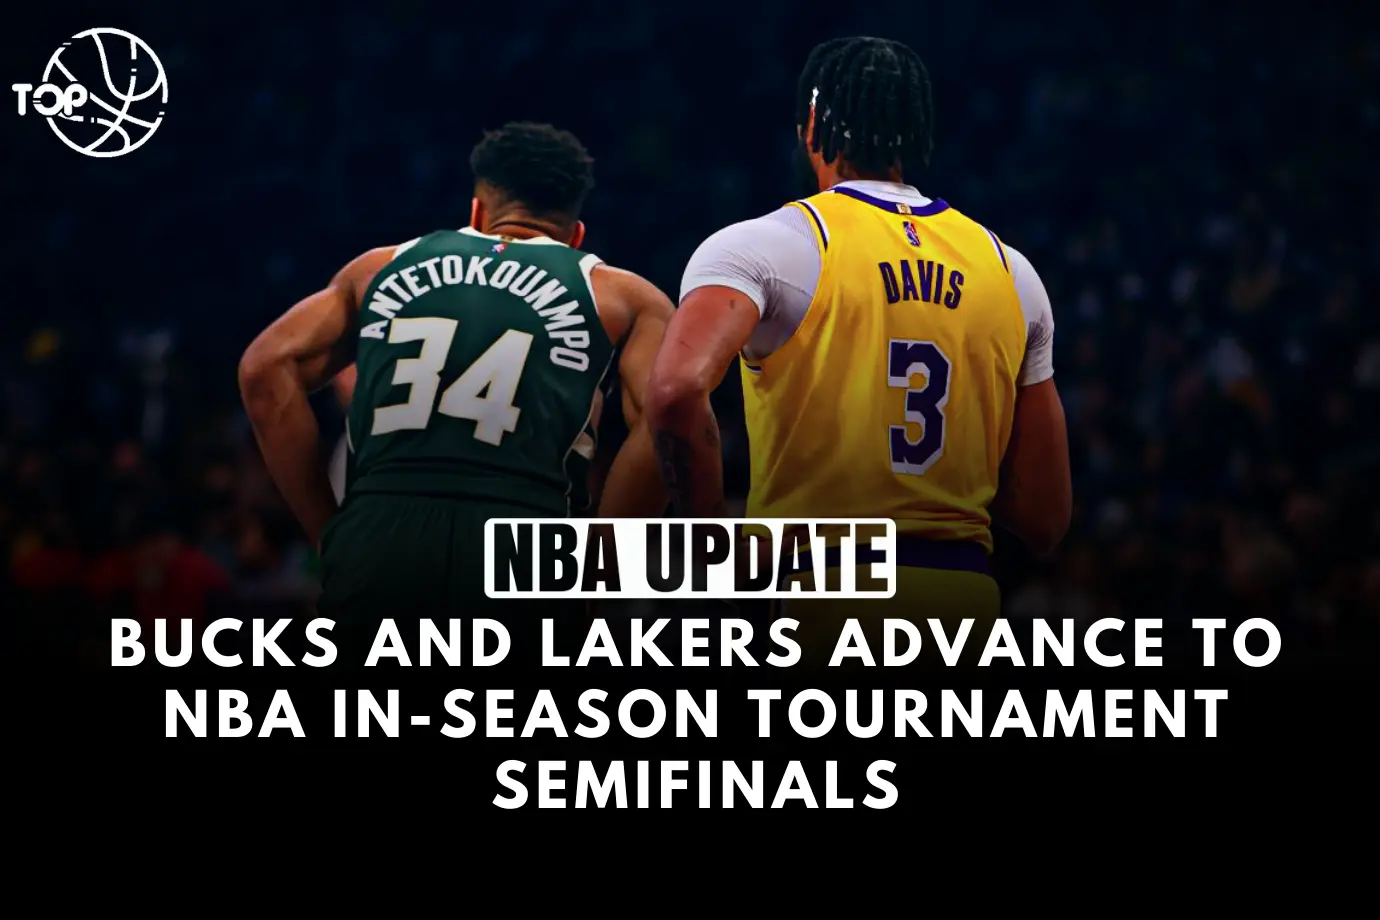 Bucks and Lakers Advance to NBA In-Season Tournament Semifinals